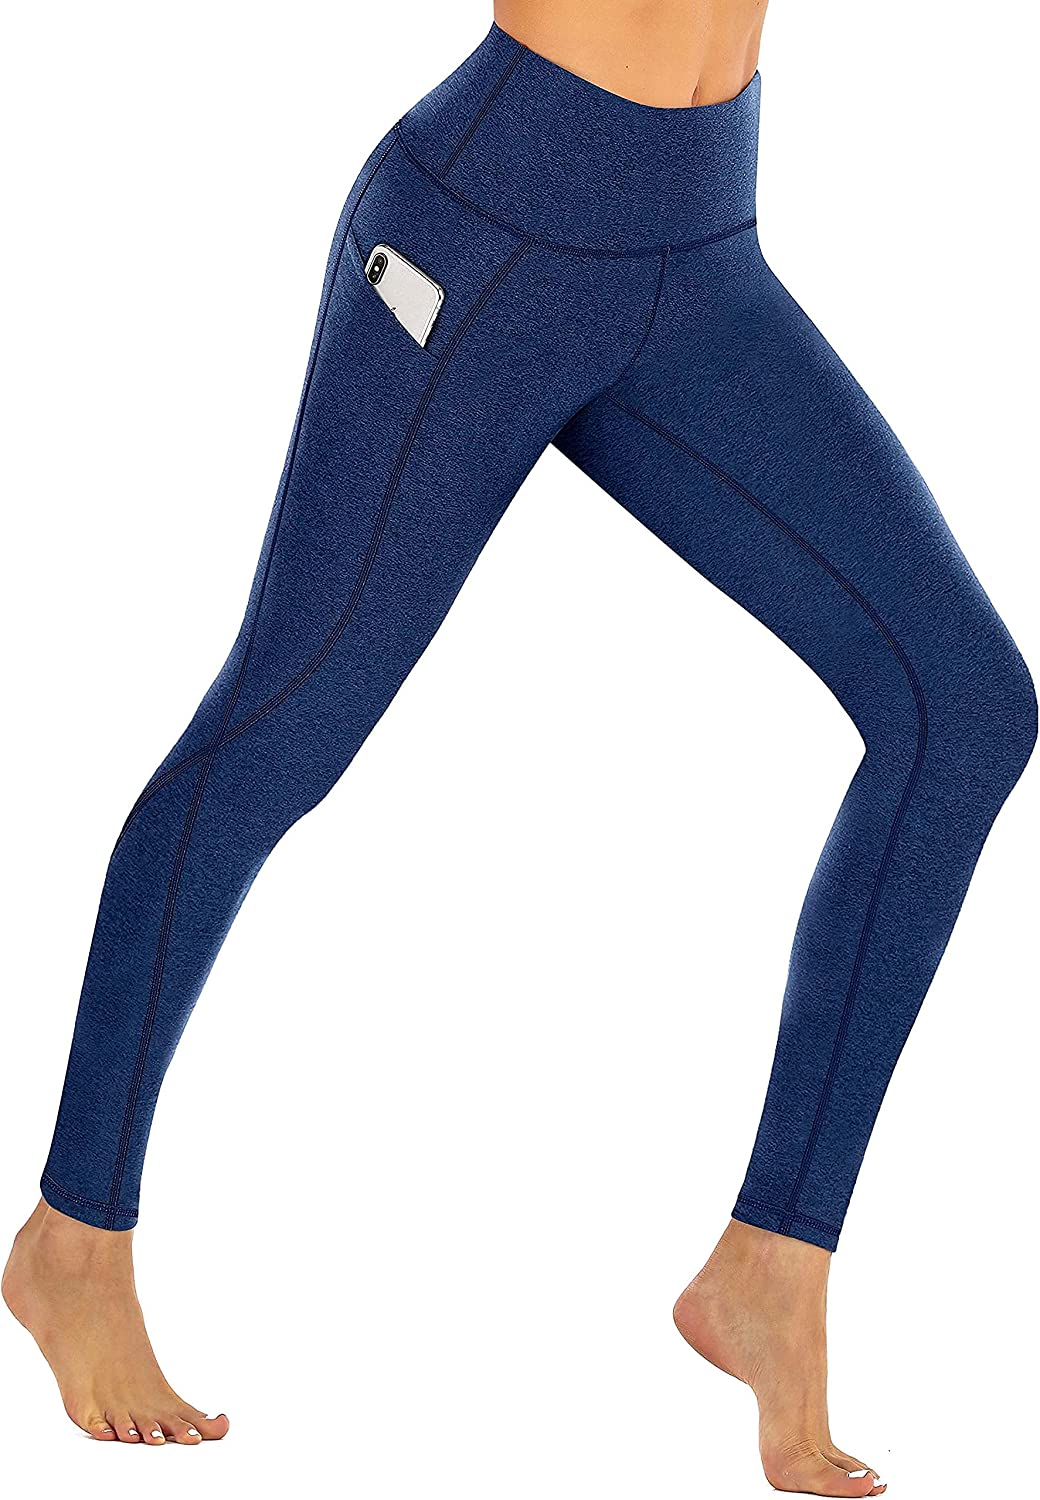 Ewedoos High Waisted Yoga Pants with Pockets for Women